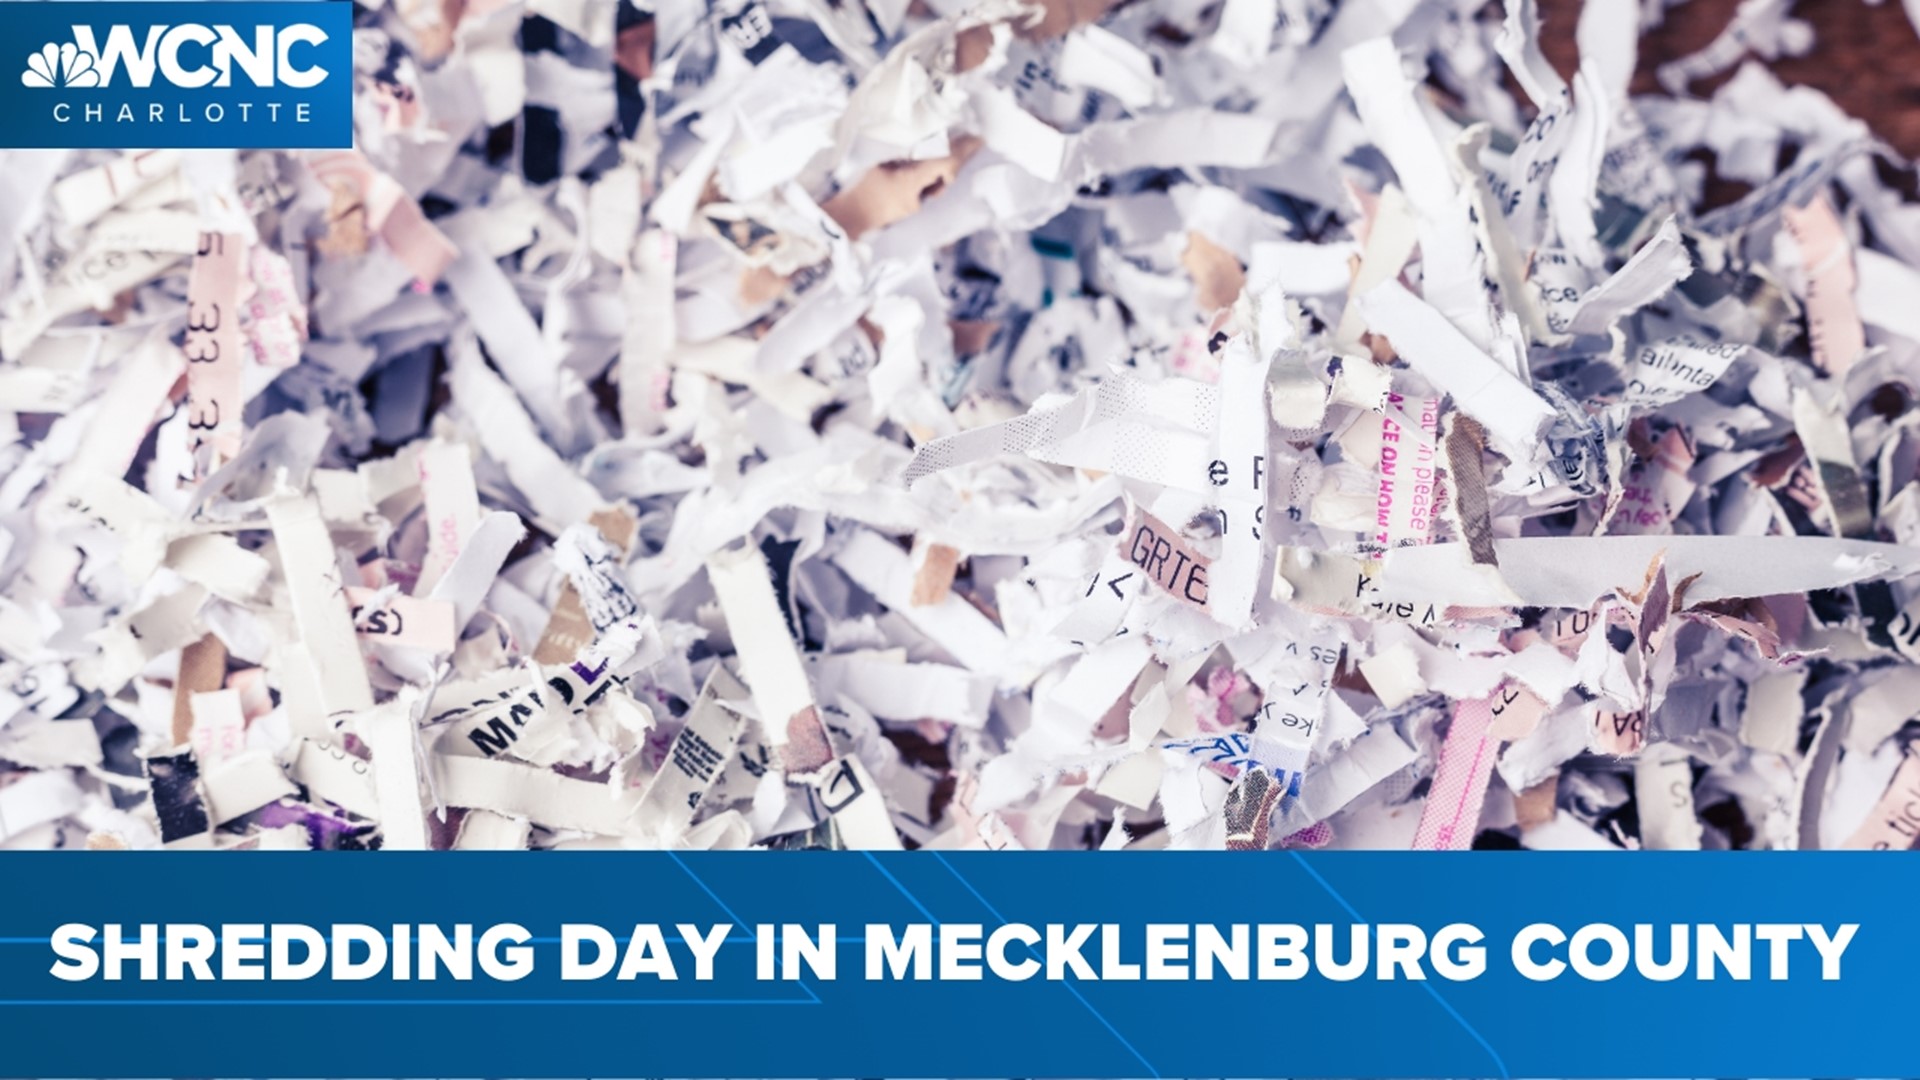 Shredding Day event in Mecklenburg County